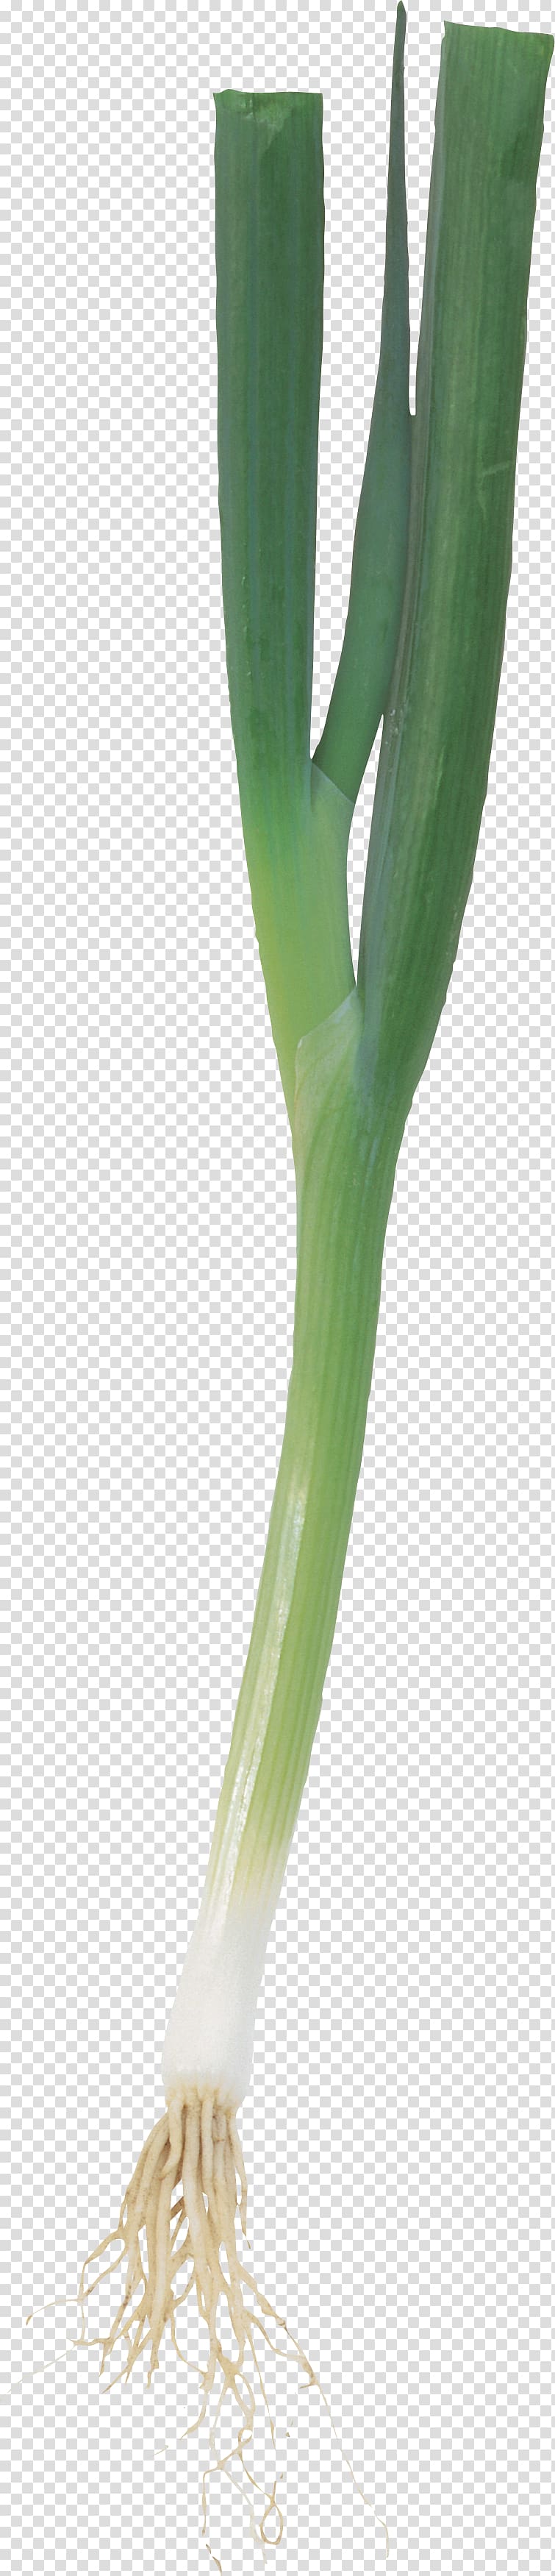 Allium fistulosum Onion Scallion Leek Shashlik, onion transparent background PNG clipart